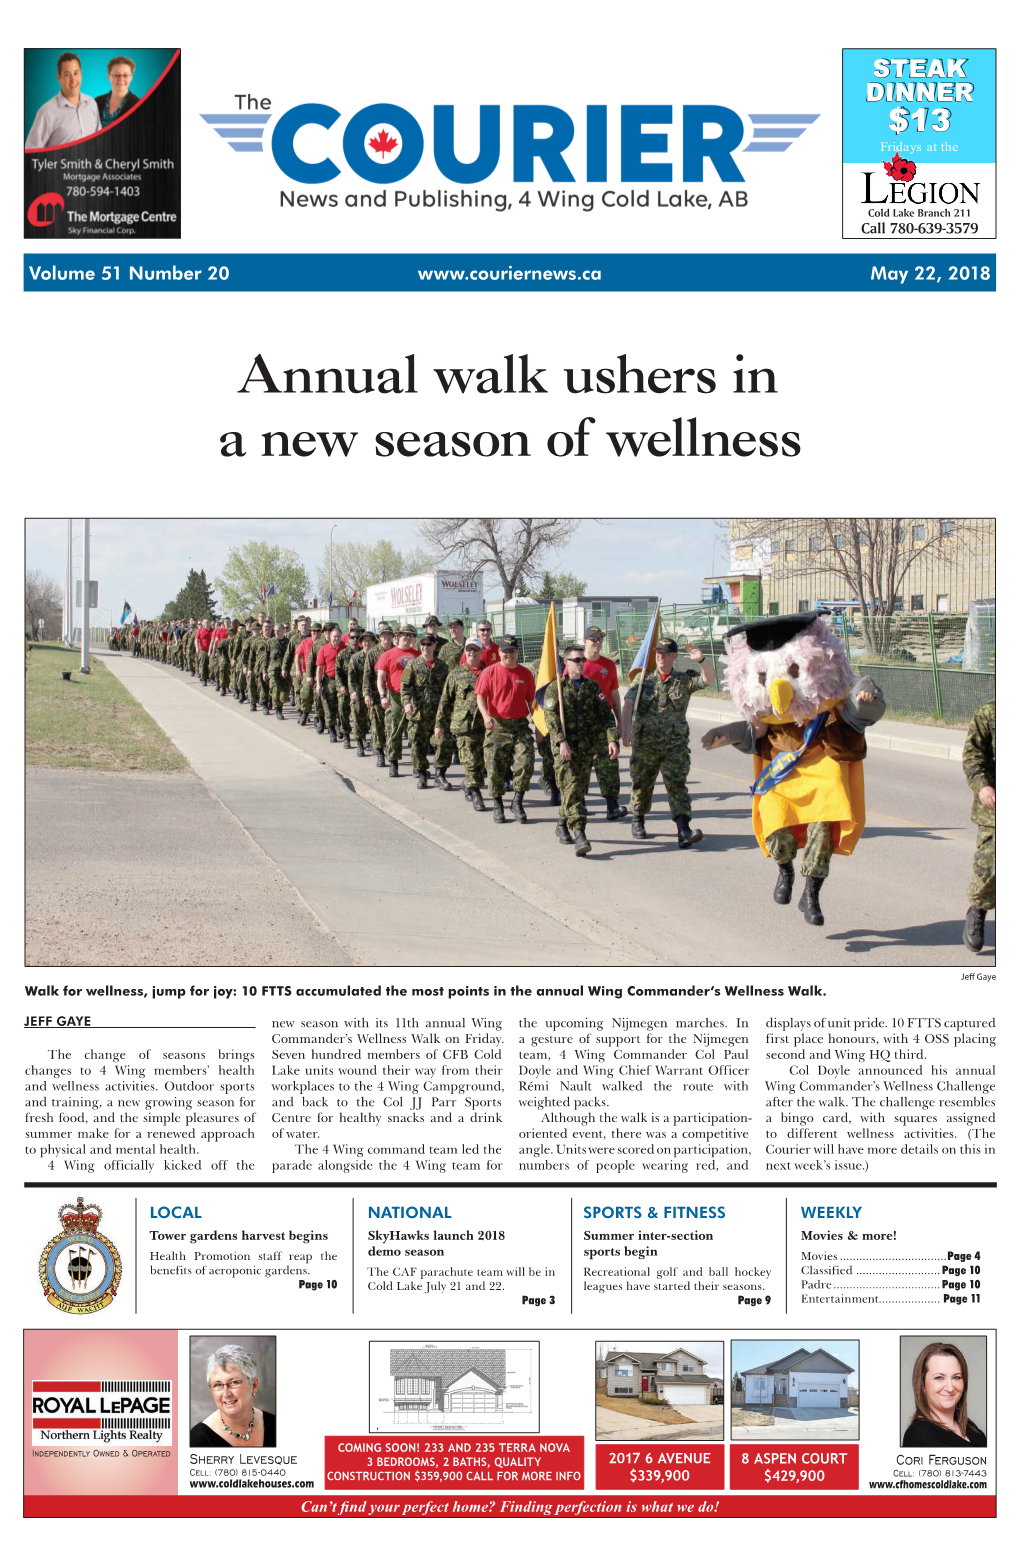 Annual Walk Ushers in a New Season of Wellness